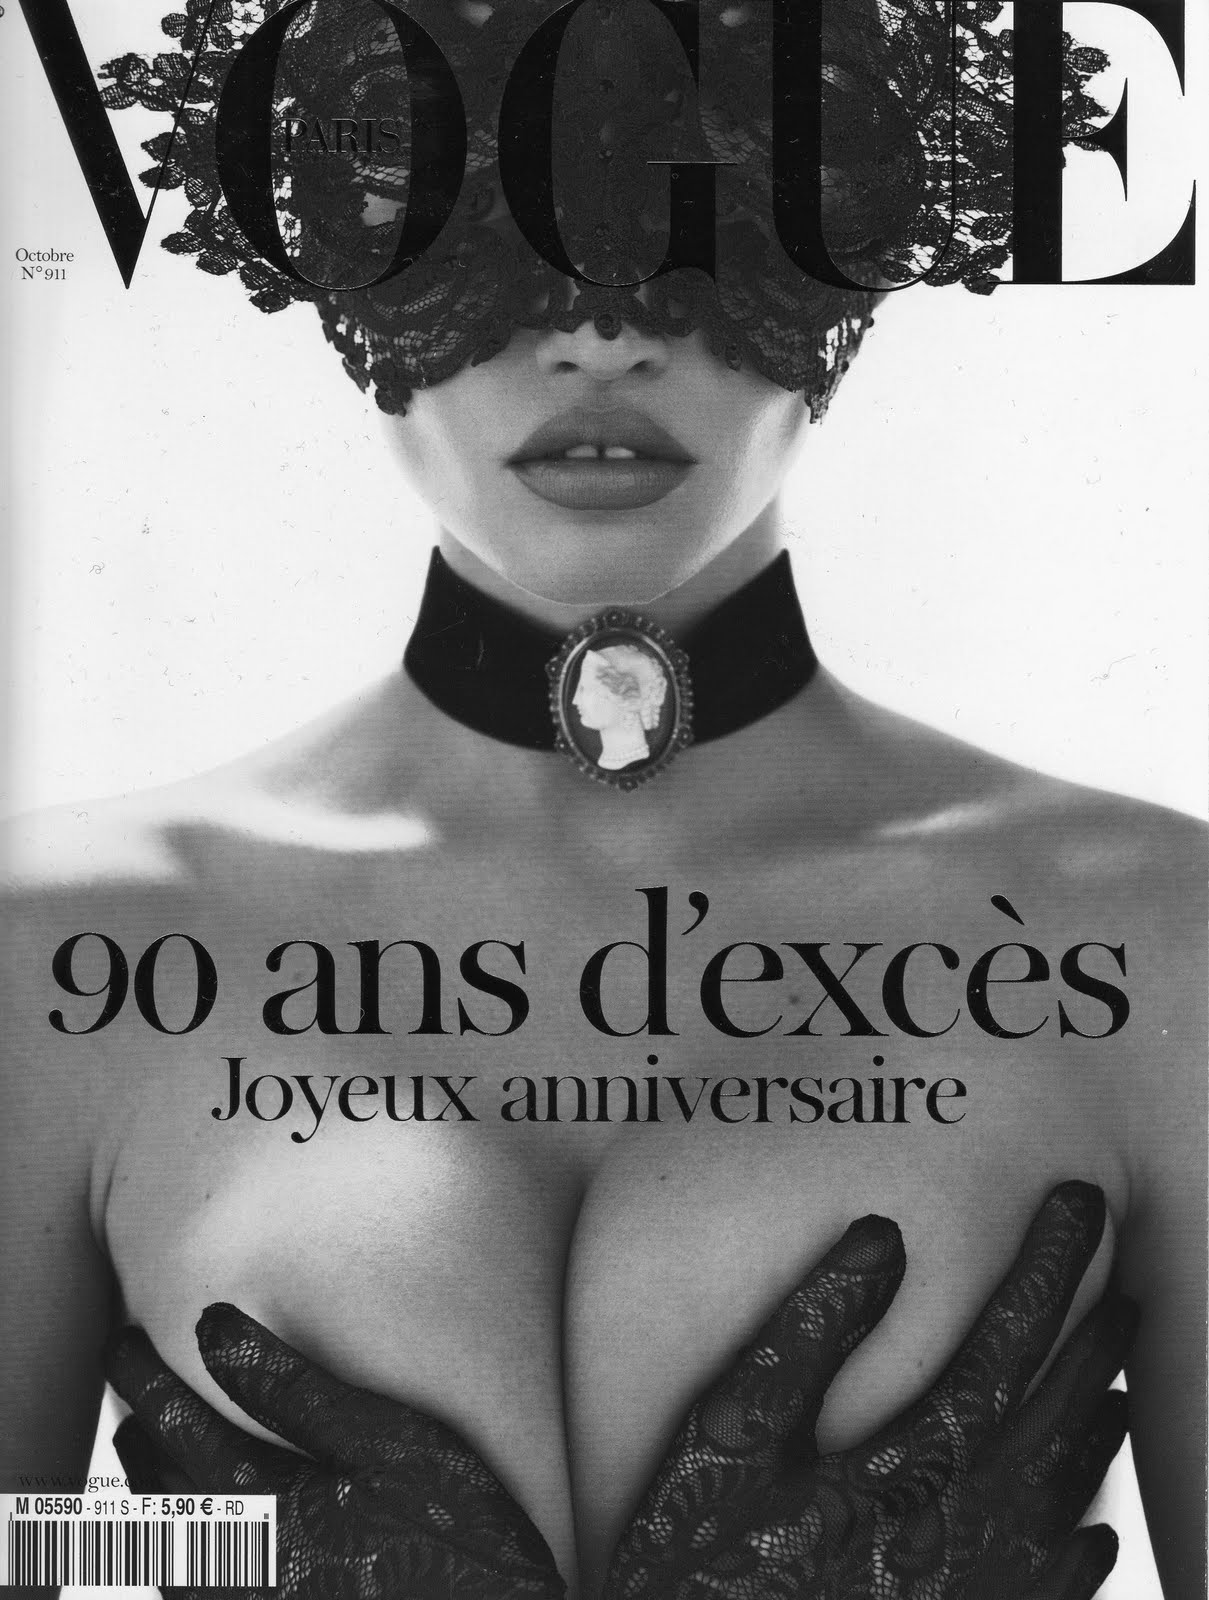 https://blogger.googleusercontent.com/img/b/R29vZ2xl/AVvXsEhSIL7orPt4cgaFp_kkhQBoJ7JI7_7K3p6HPOICVYI6rj7pm5Owi6qL0jIed5einbrqDfw11c6fR50Hqwv47nv6upoKcVIaTneU6BTpMOrnVhpxyO4nXyQ3wIG2iBfdnPhlVAg_aBLNfB0/s1600/Lara+Stone,+Freja+Beha+Erichsen+&amp;+Mariacarla+Boscono+for+Vogue+Paris+October+2010+by+Mert+&amp;+Marcus+1.jpg